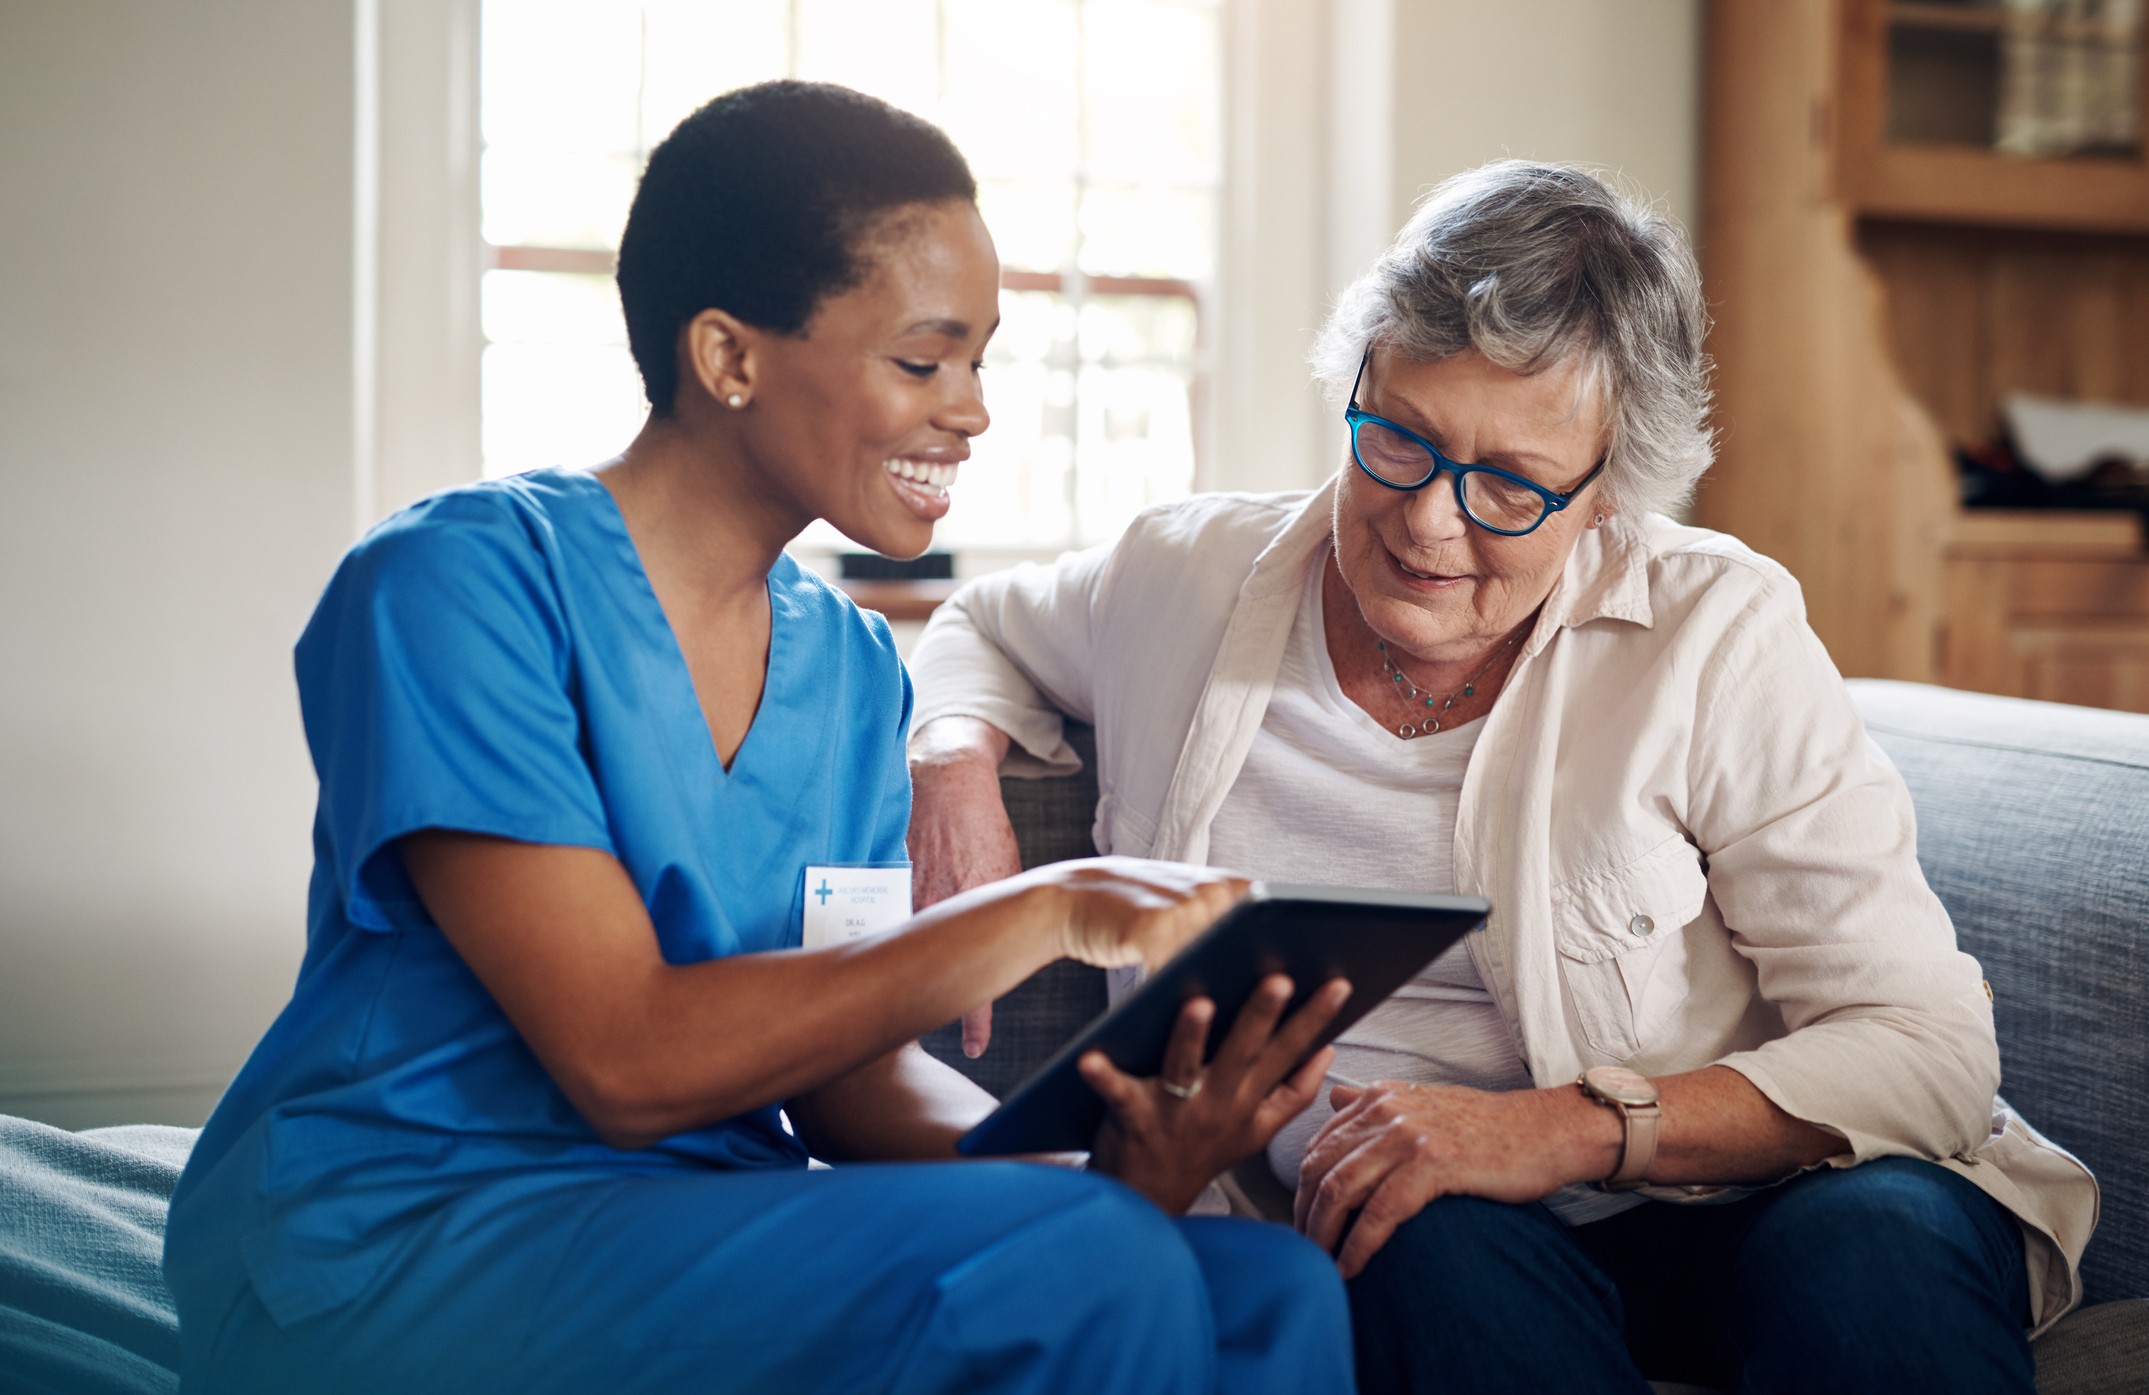 Nurse assists older patient with iPad